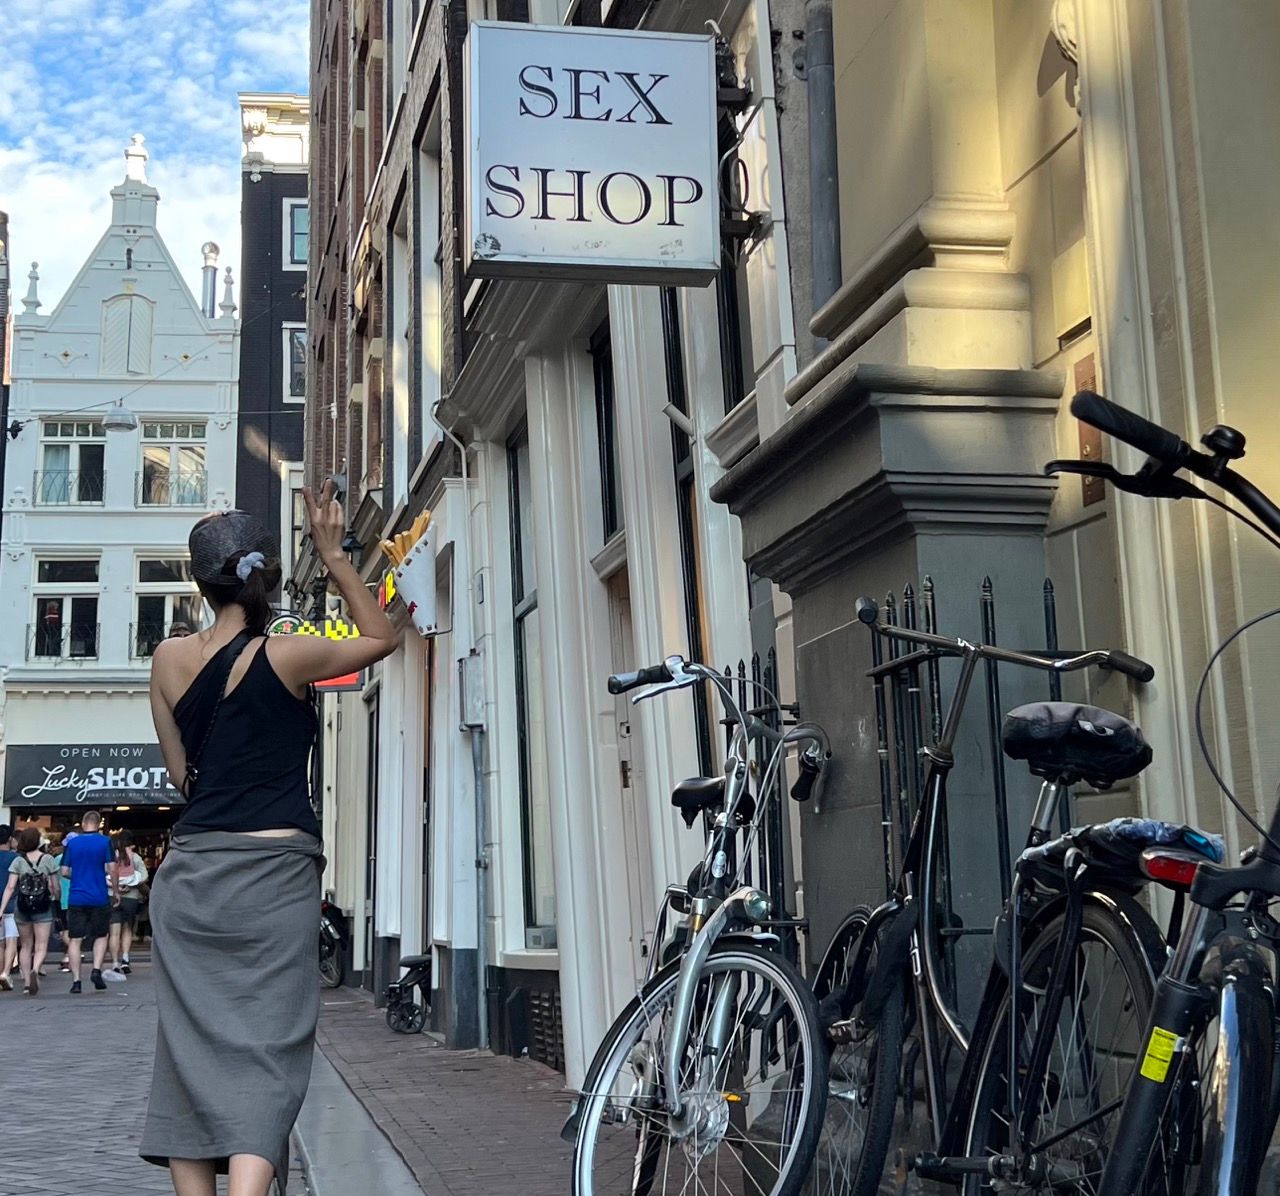 On my quick Amsterdam visit